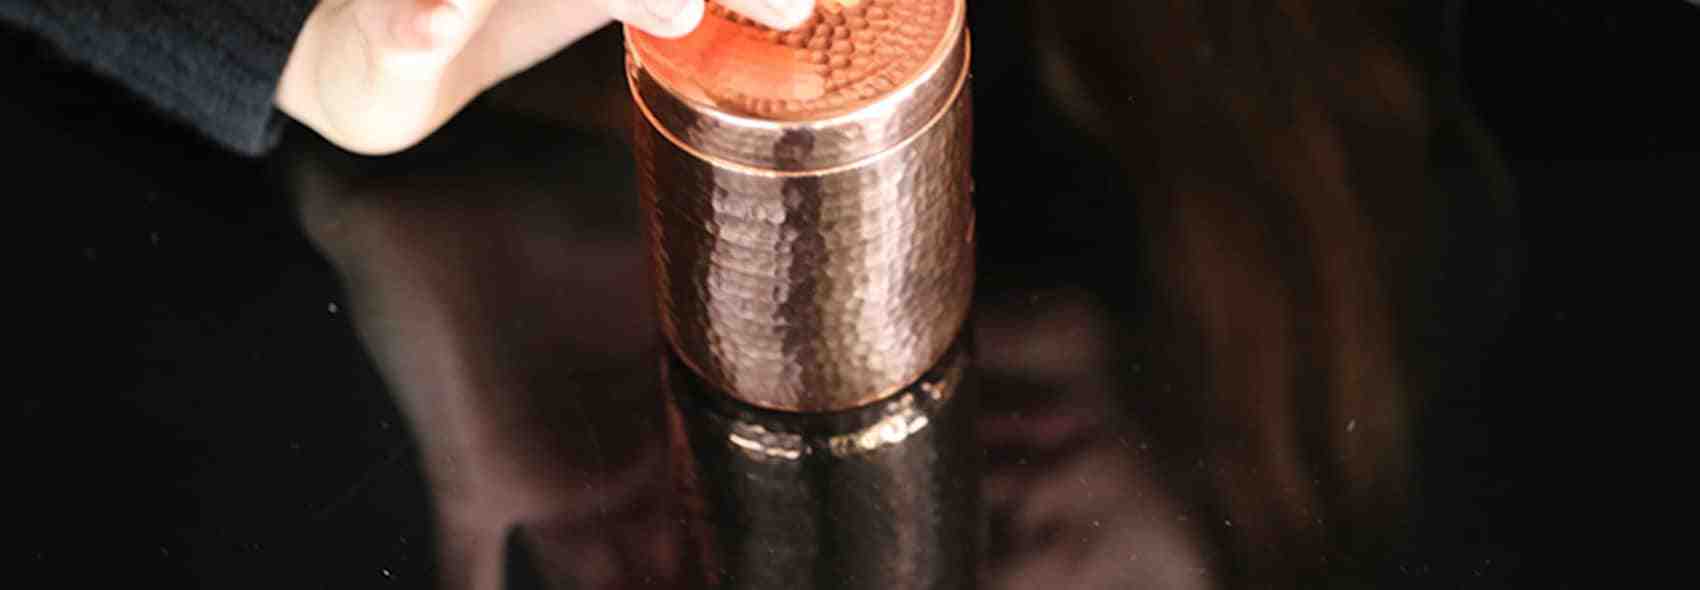 LYMA tablets in copper jar BLACK BACKGROUND